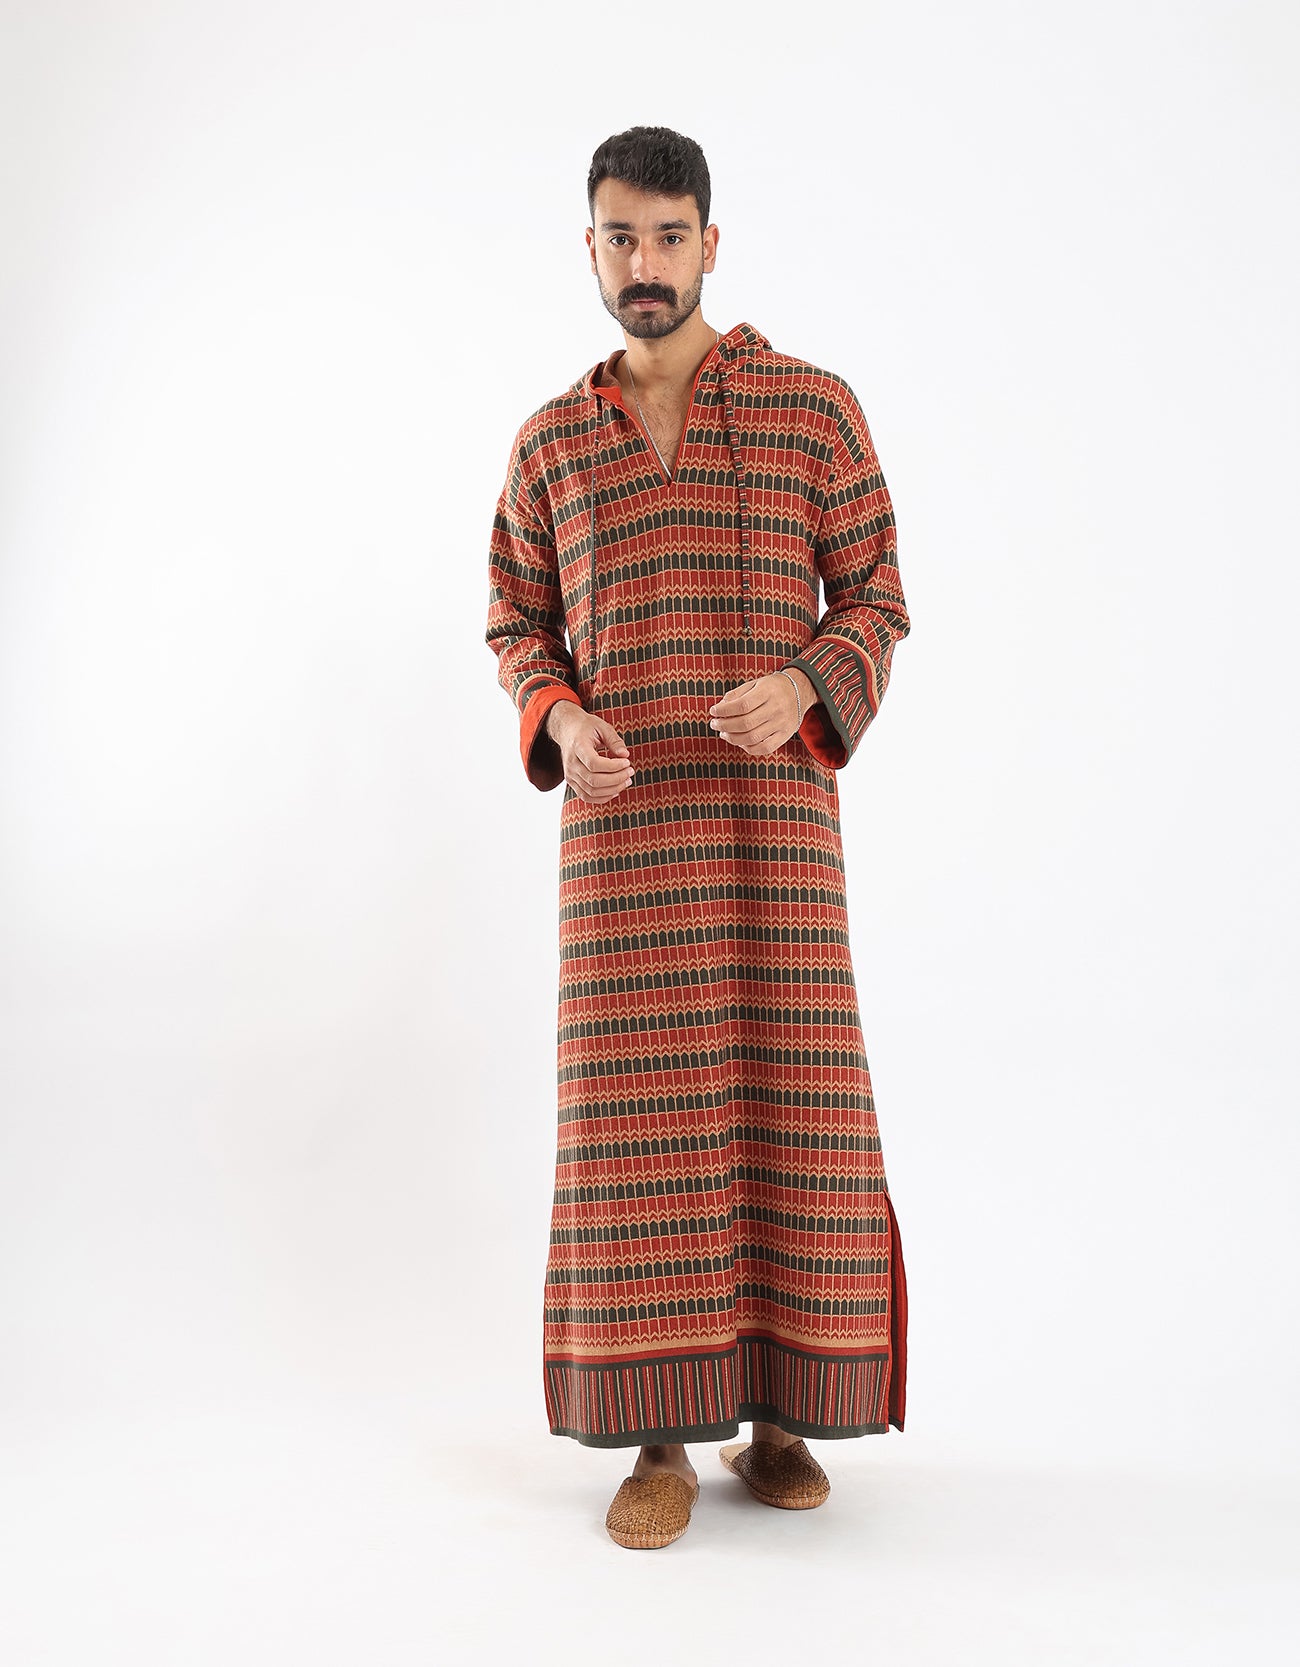 Rent or Buy Kashmiri Pathani Suit Kids Fancy Dress Costume online